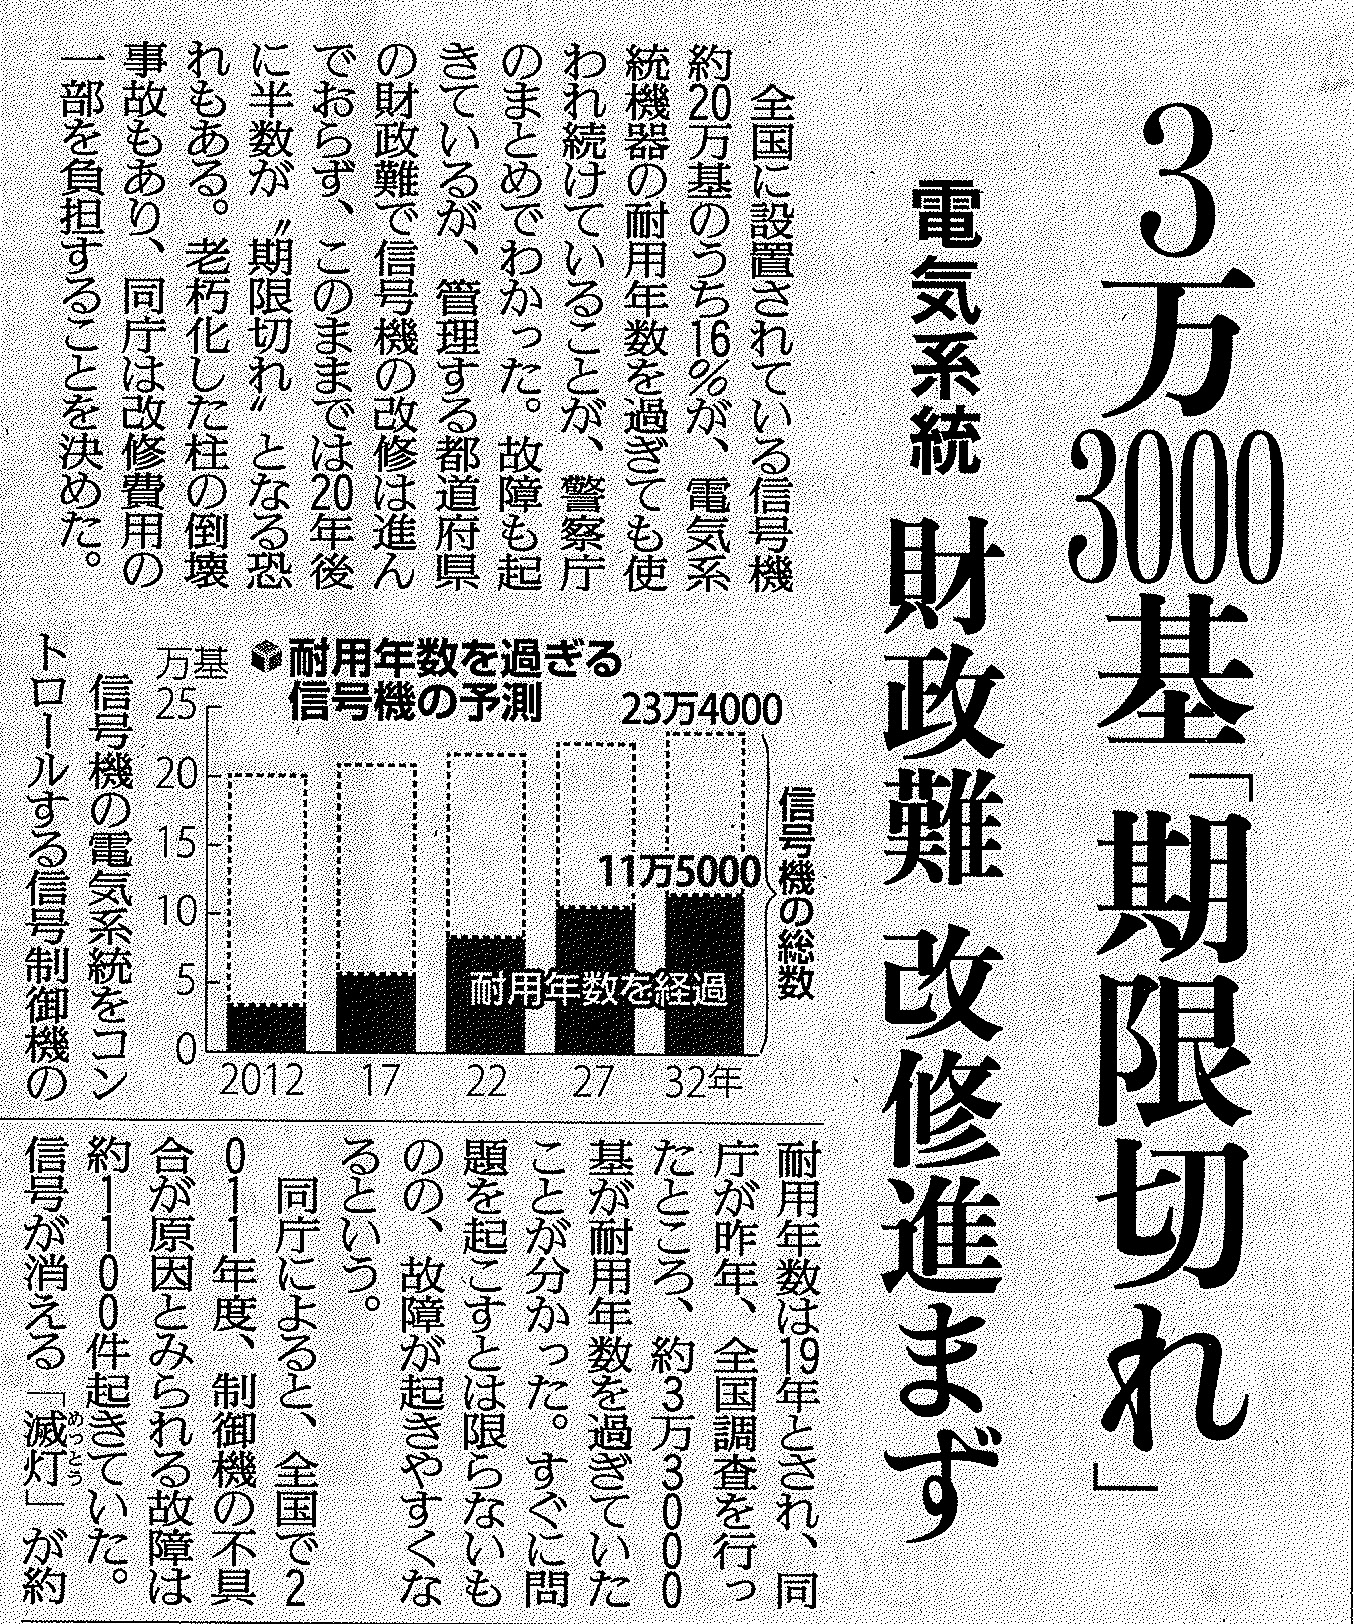 C-TCY-33000Headline-1-JapaneseNewspaper-2013.jpg
